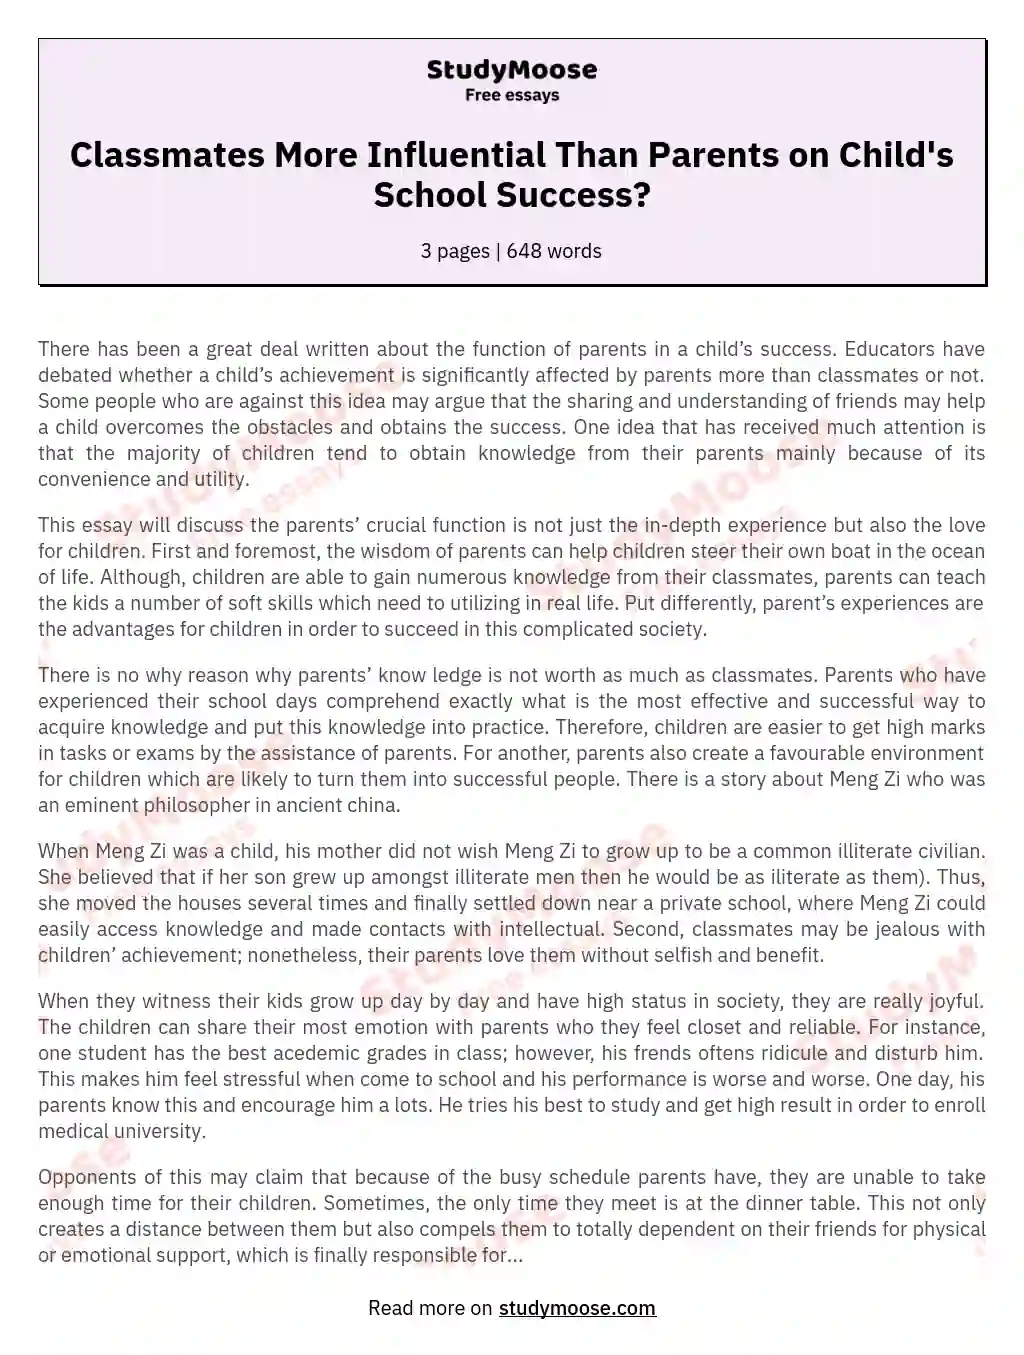 Classmates More Influential Than Parents on Child's School Success? essay